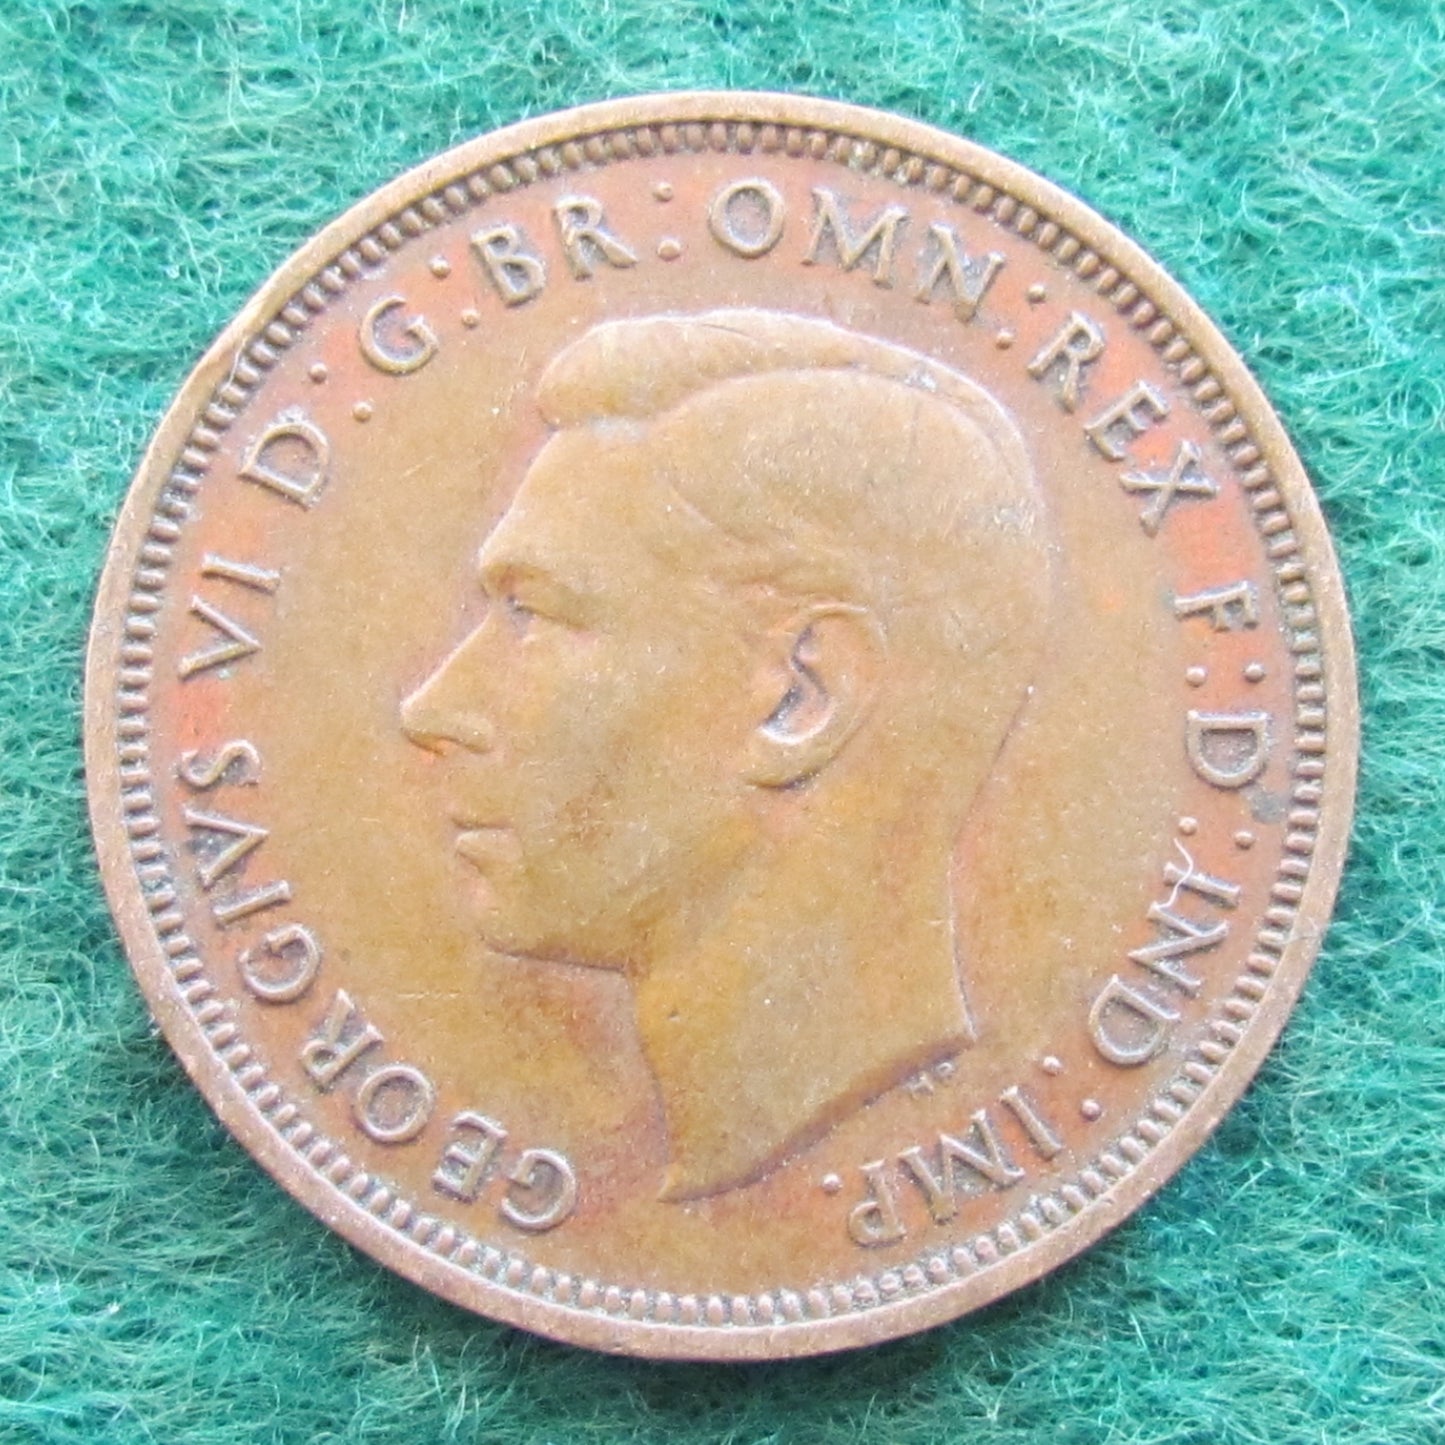 GB British UK English 1946 Half Penny King George VI Coin